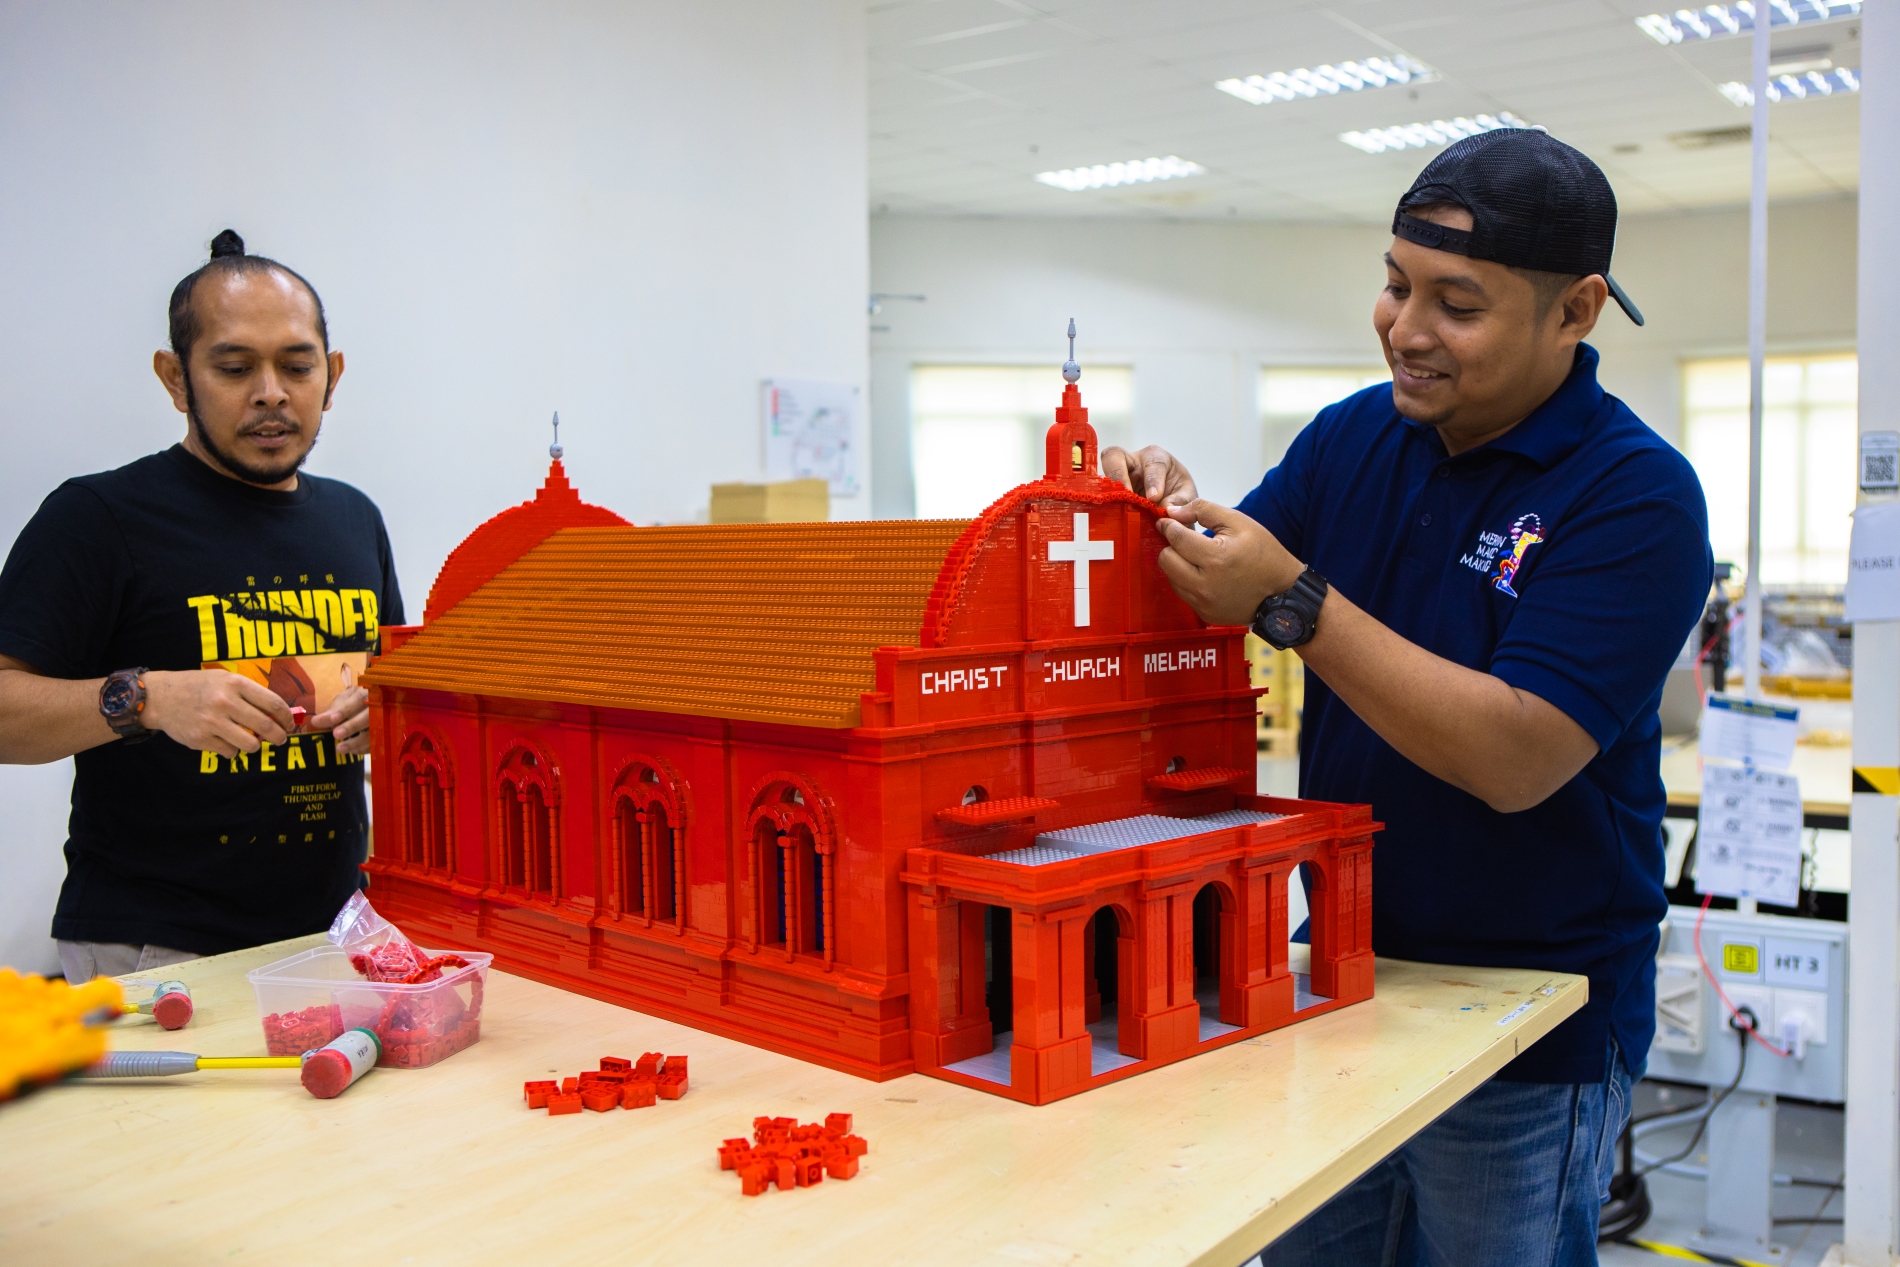 2 LEGO builders building a LEGO model of Malacca's Christ Church.